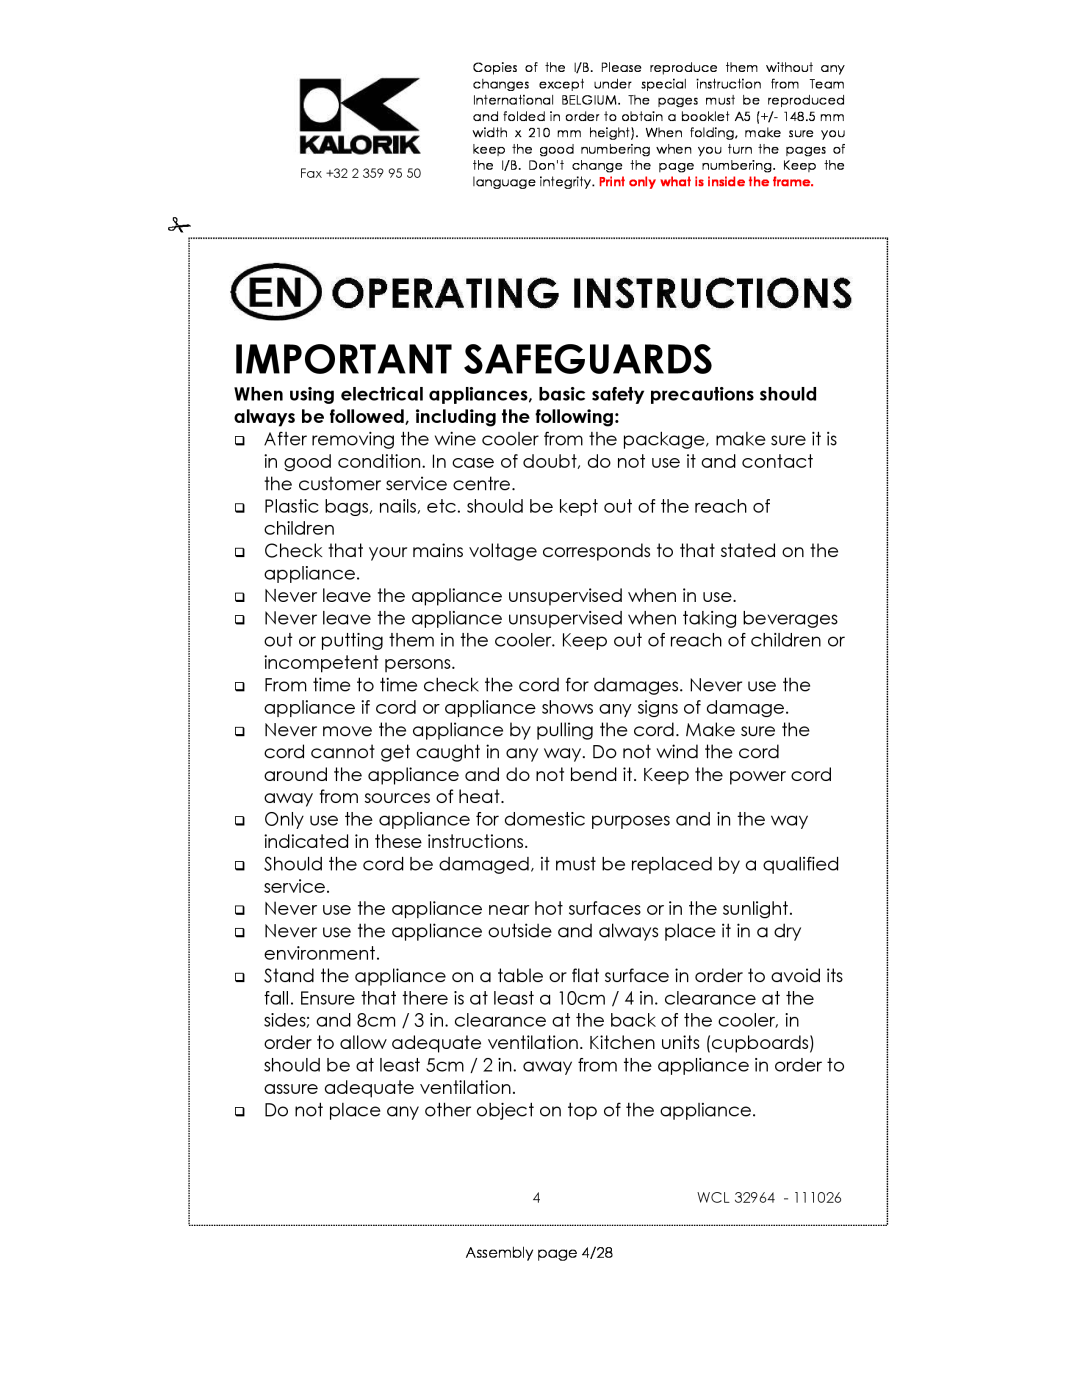 Kalorik USK WCL 32964 115V~130W manual Important Safeguards, Wcl, Assembly page 4/28 